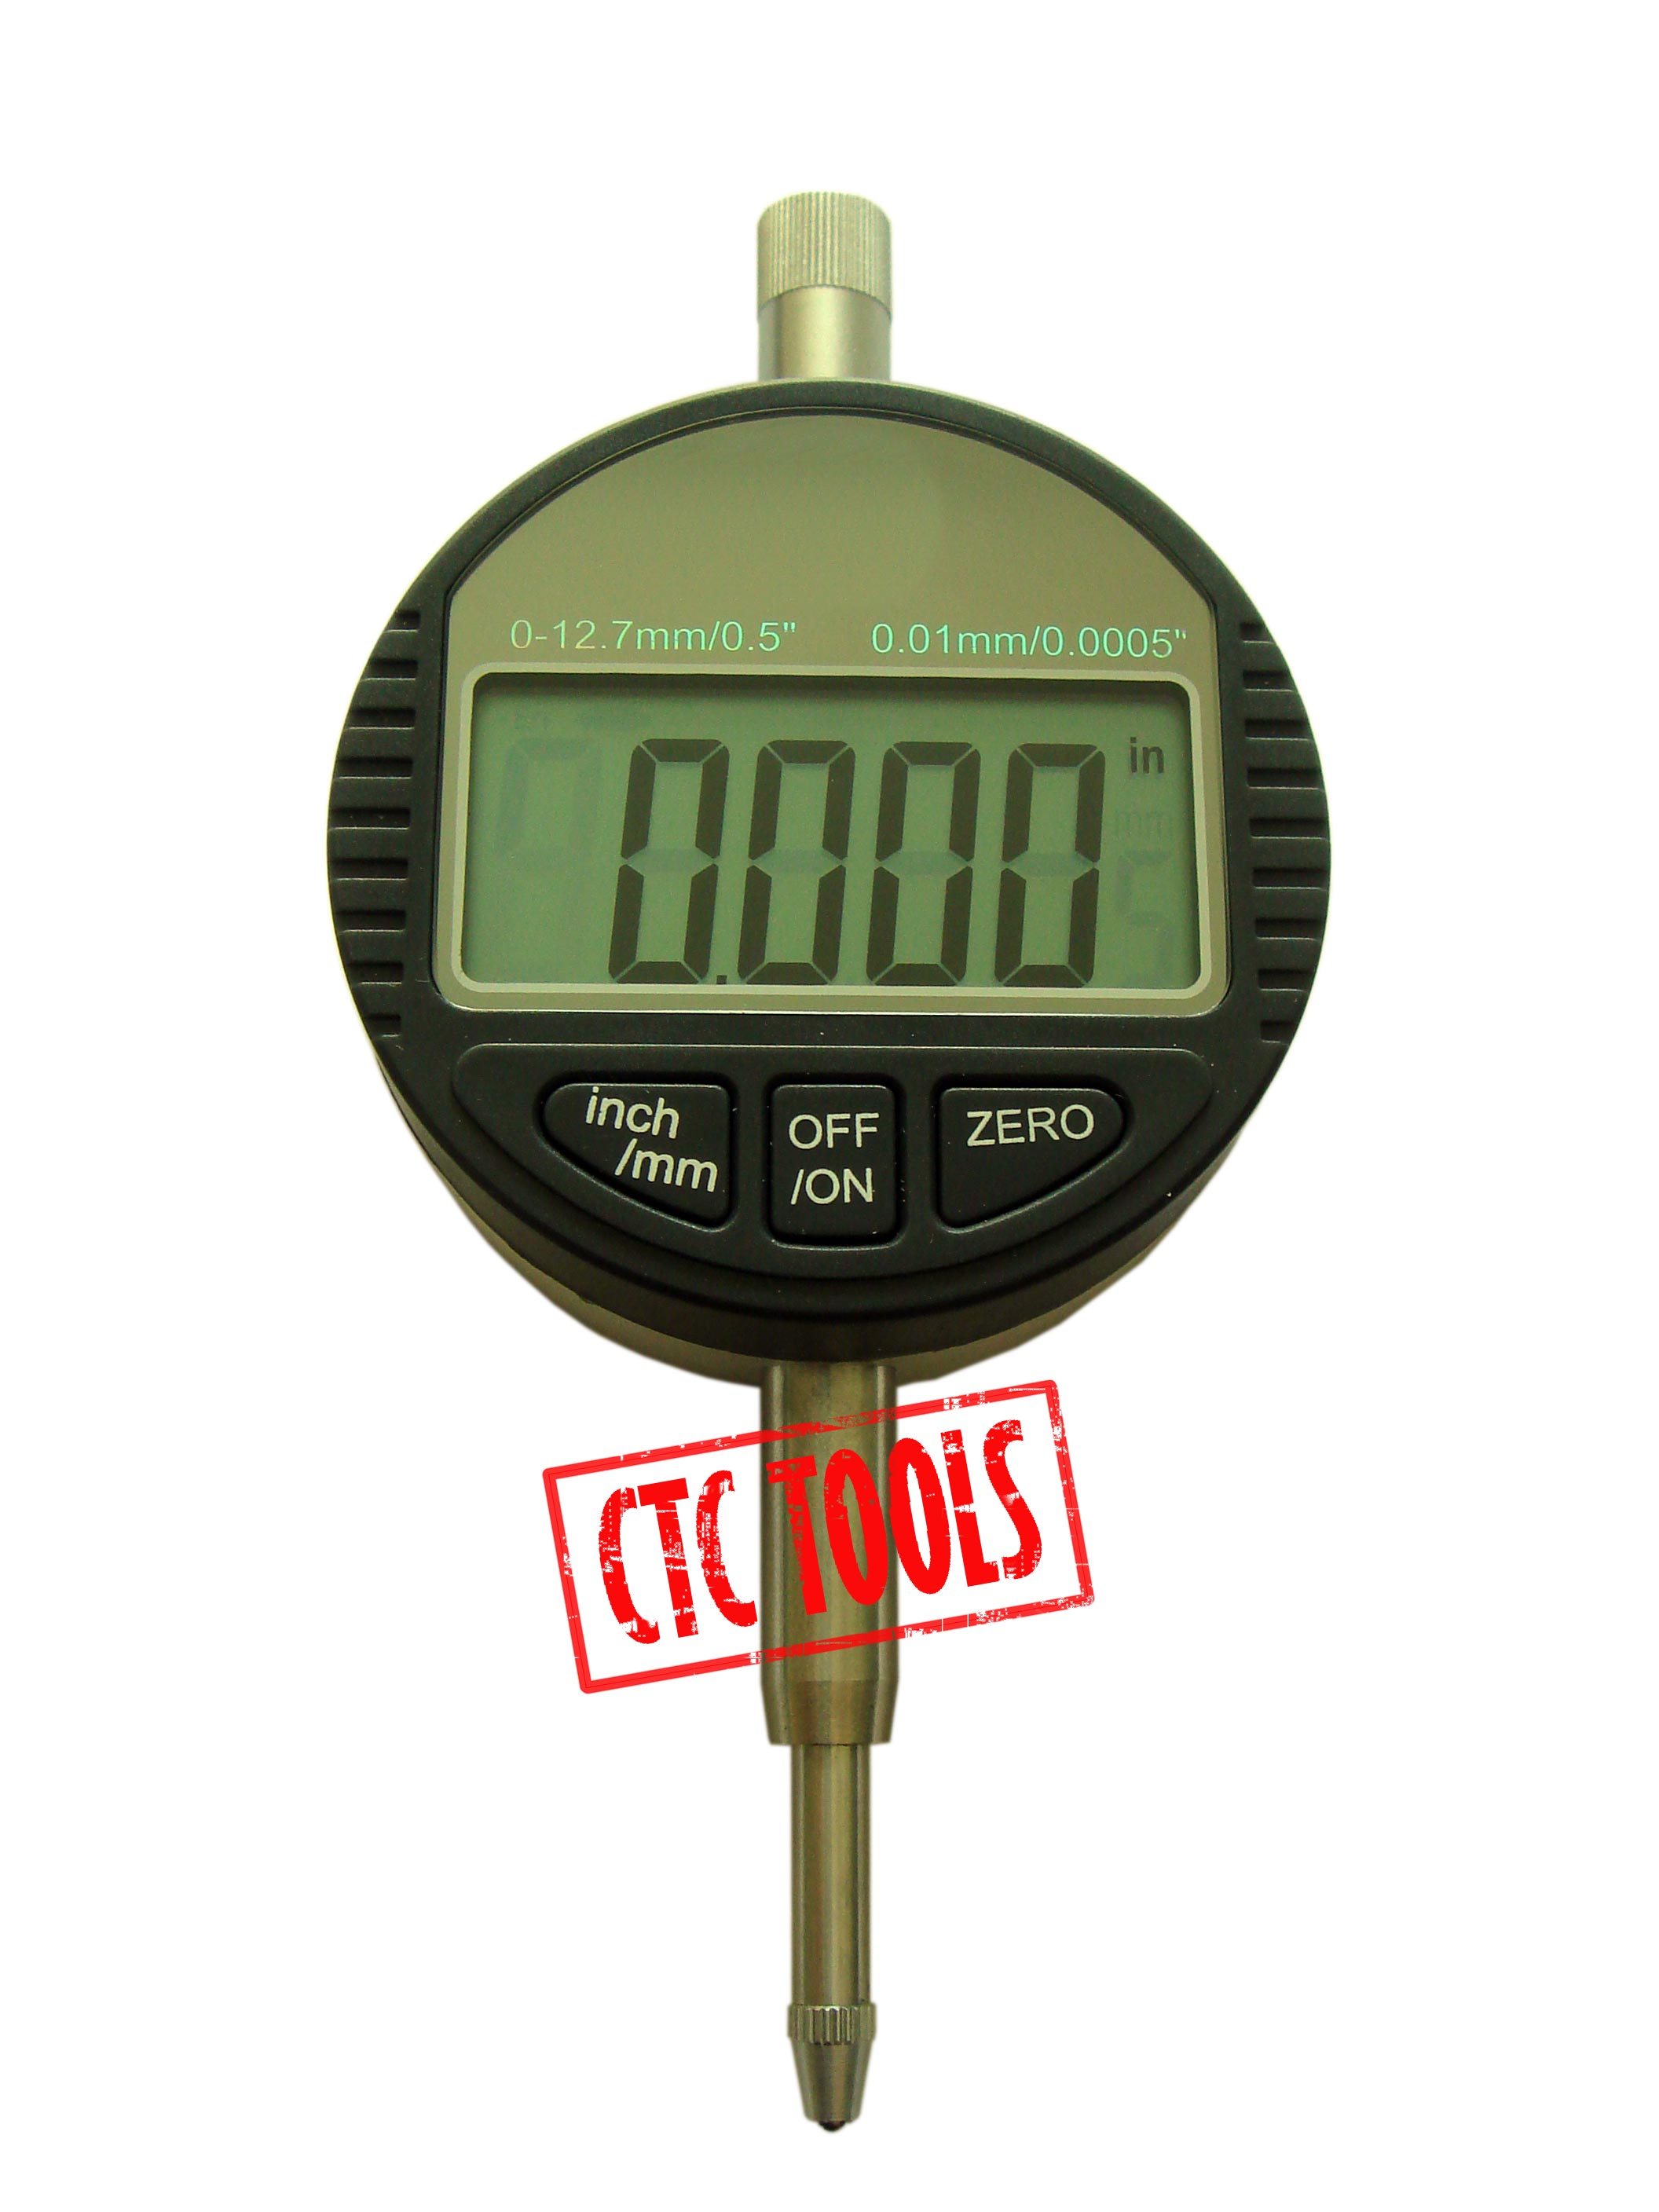 NEW Digital Dial Indicator 0.001mm/.0005" Range 0-25.4mm/1" Gauge 